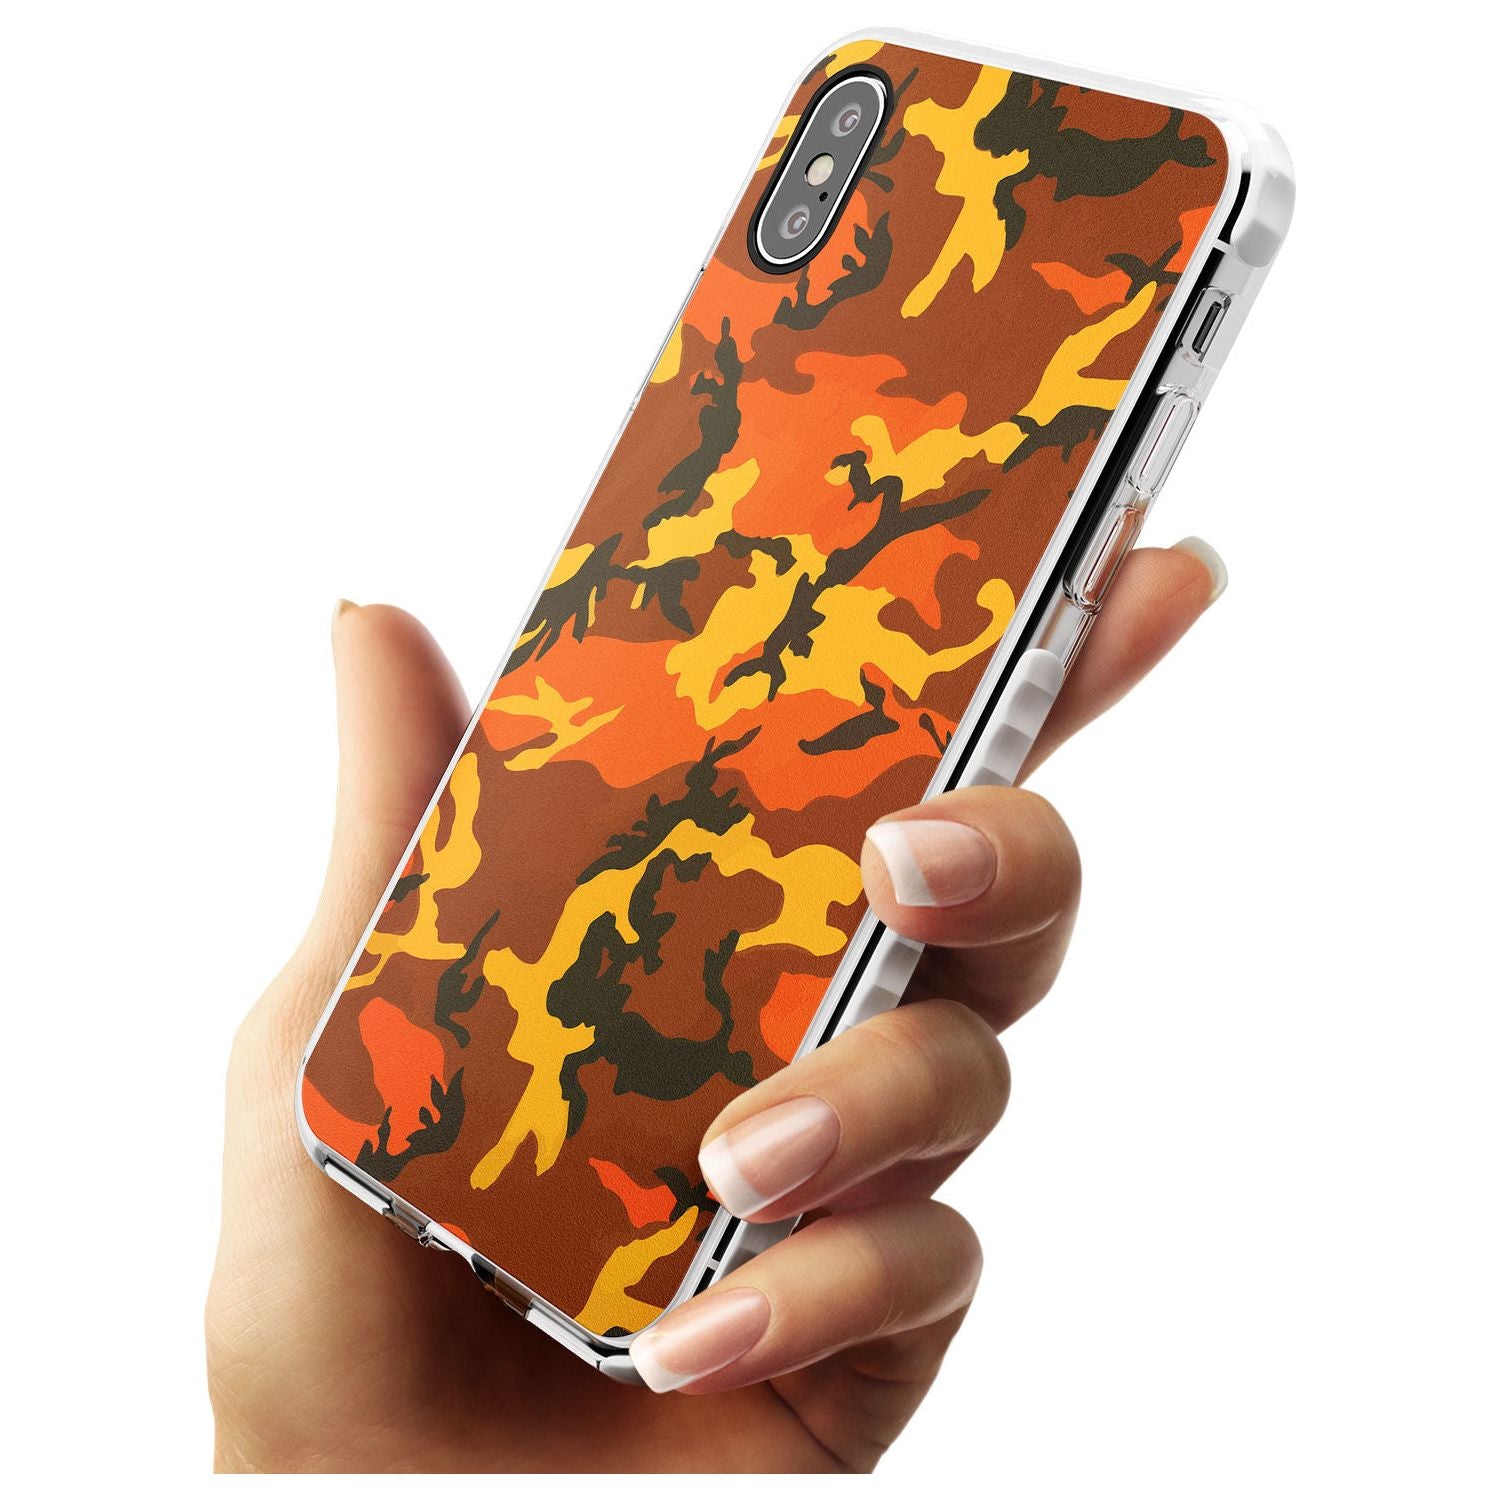 Orange Camo Impact Phone Case for iPhone X XS Max XR